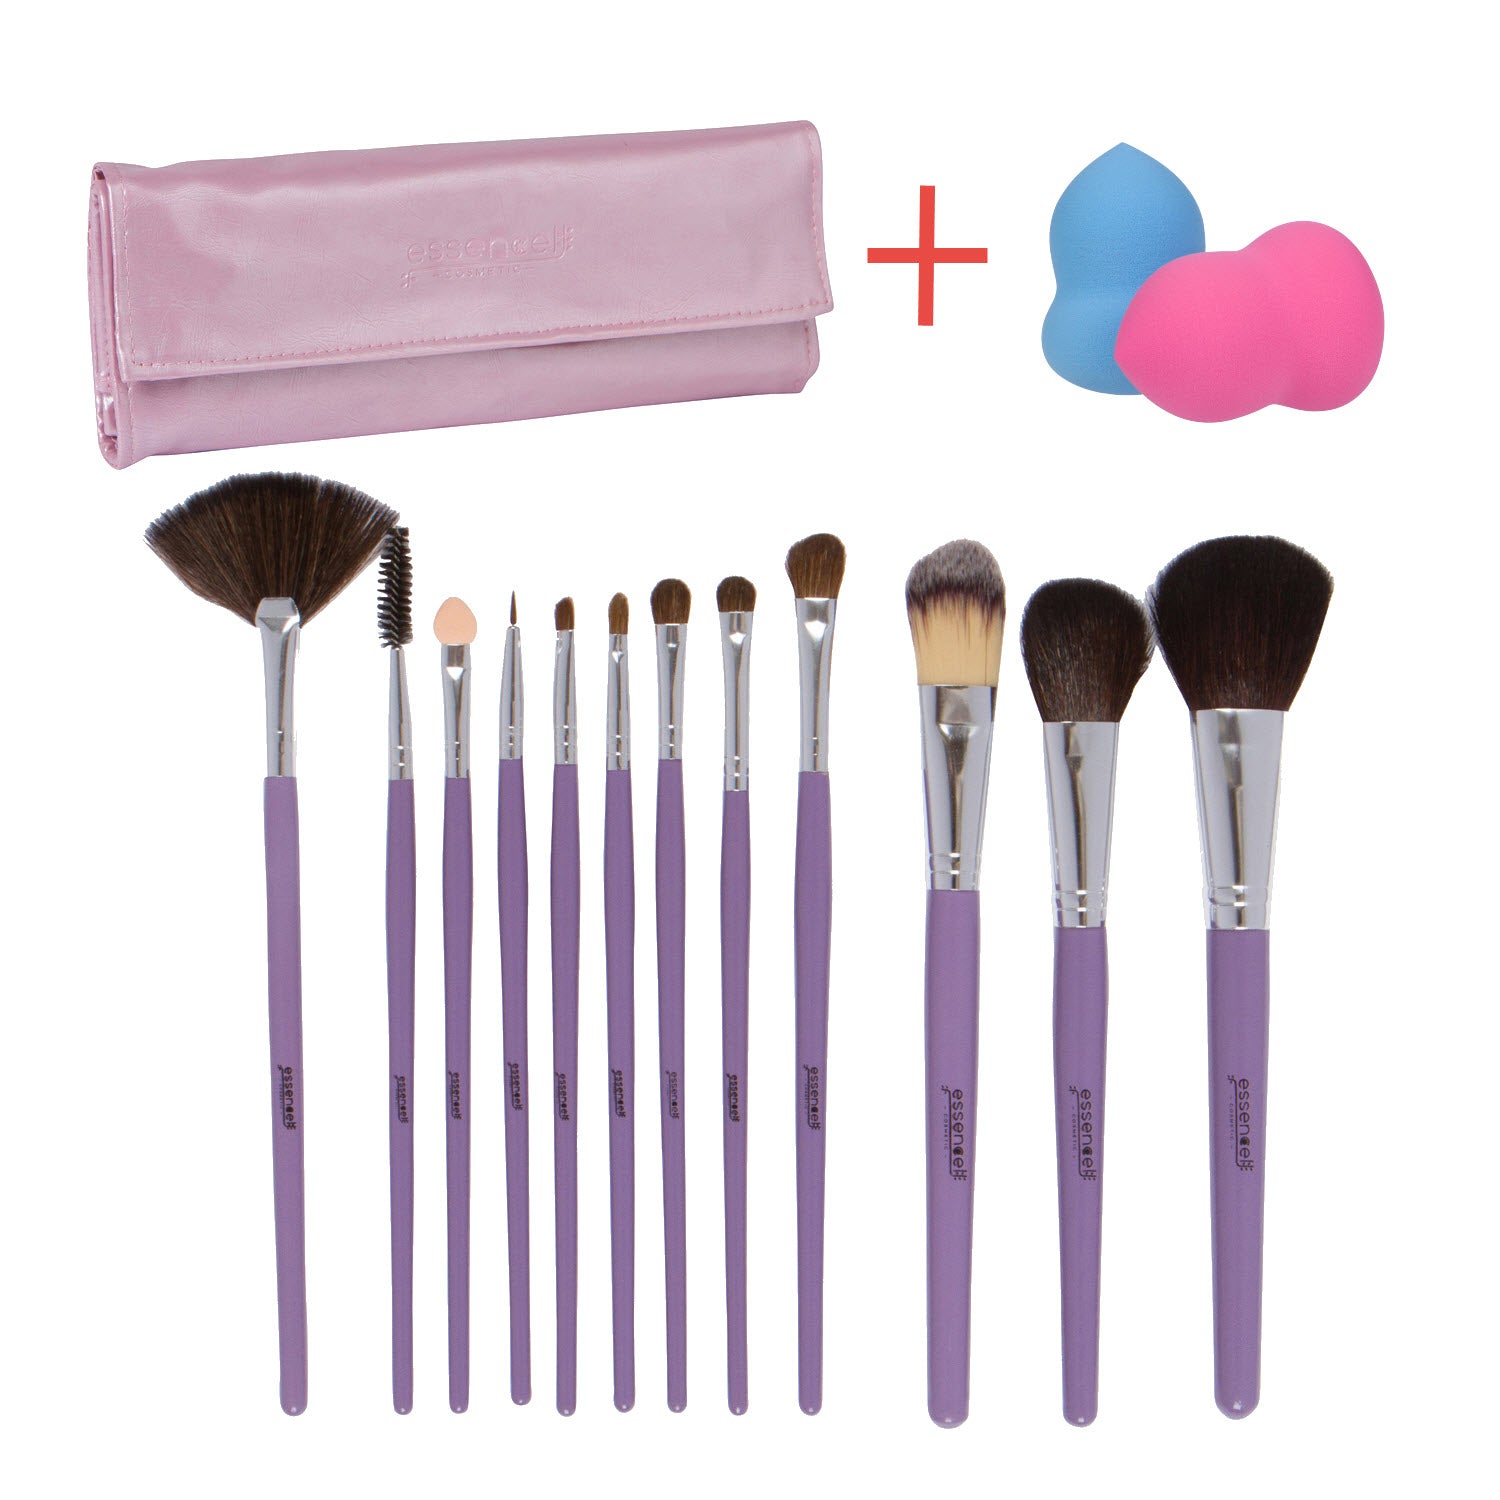 Essencell 12 Pieces Makeup Brush Set, Light Purple with Makeup Blender Sponge and Travel Essentials Case